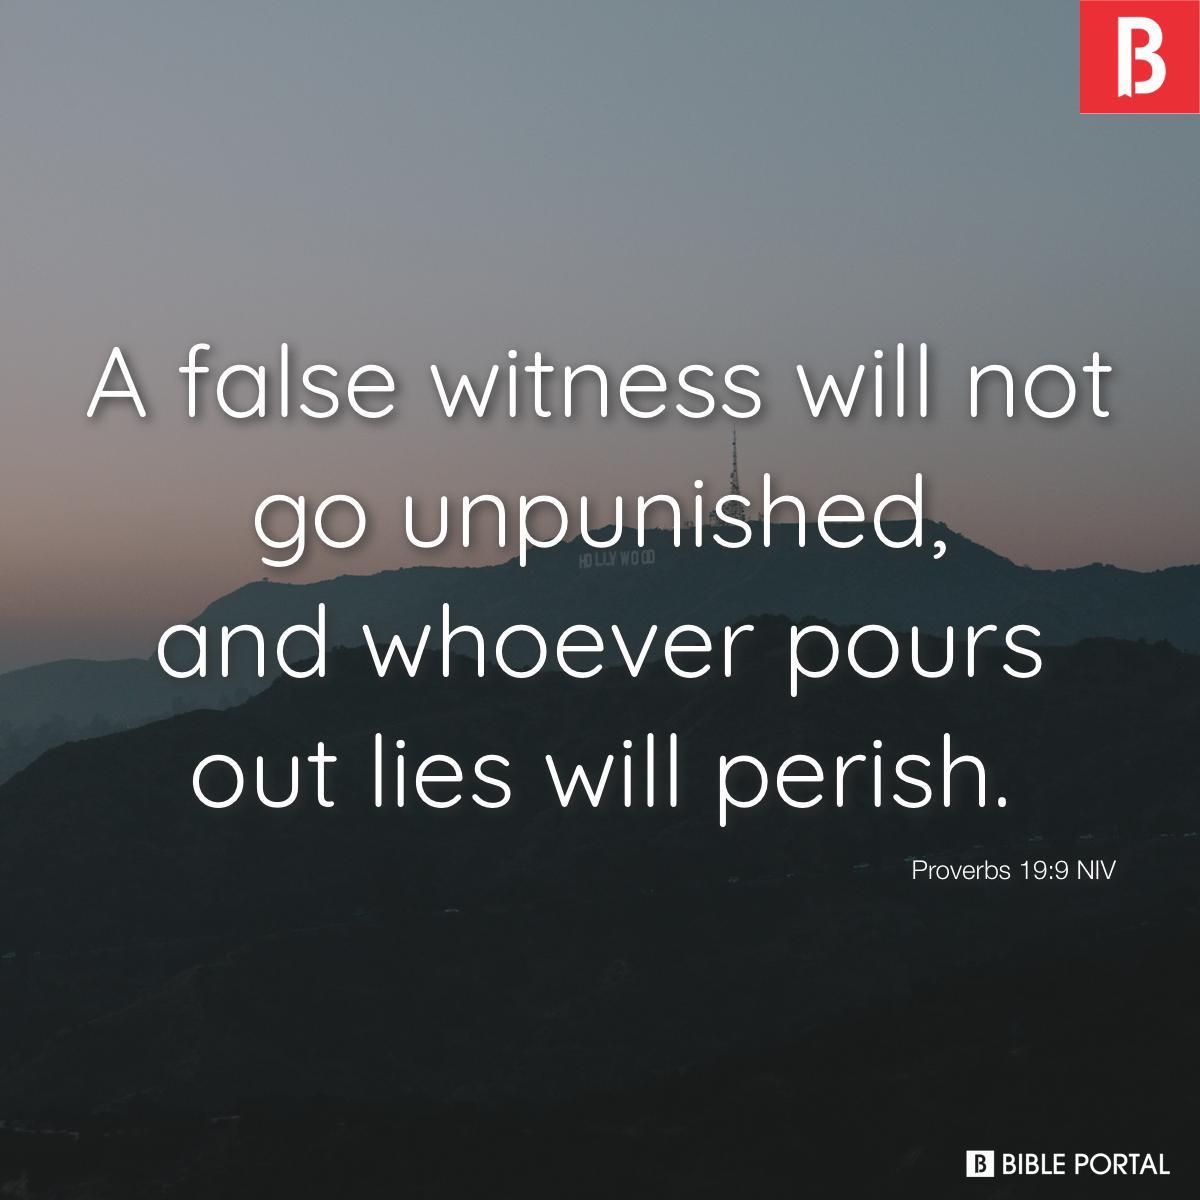 Proverbs 19:9 NIV